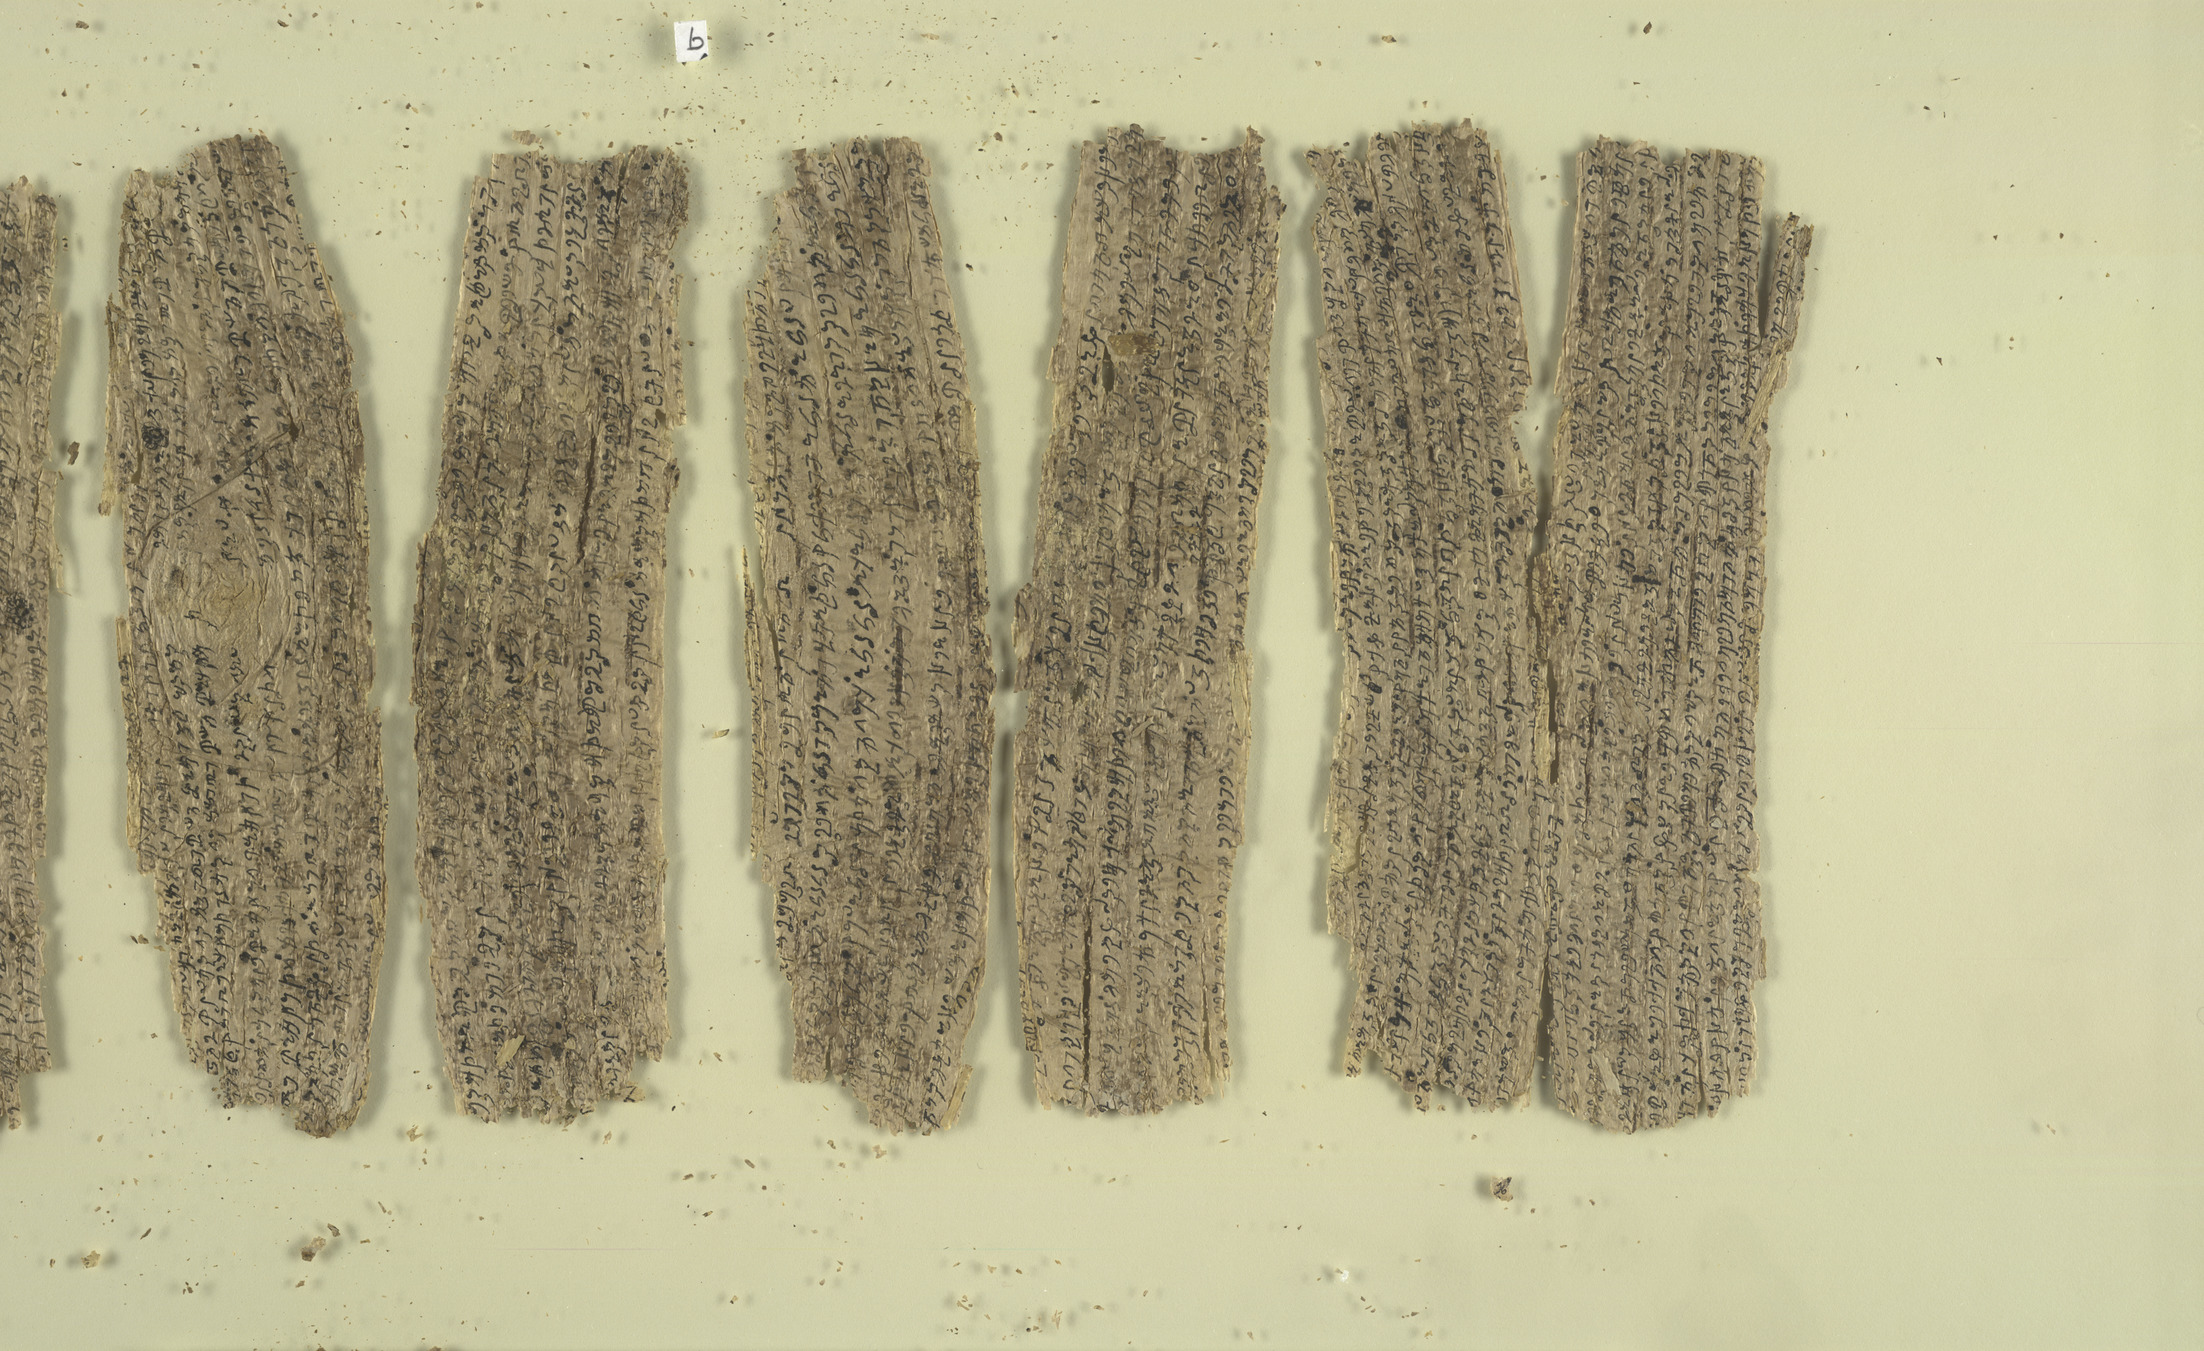 Fragmentary Buddhist text   Gandhara birchbark scrolls (1st C), part 31   BL Or. 14915